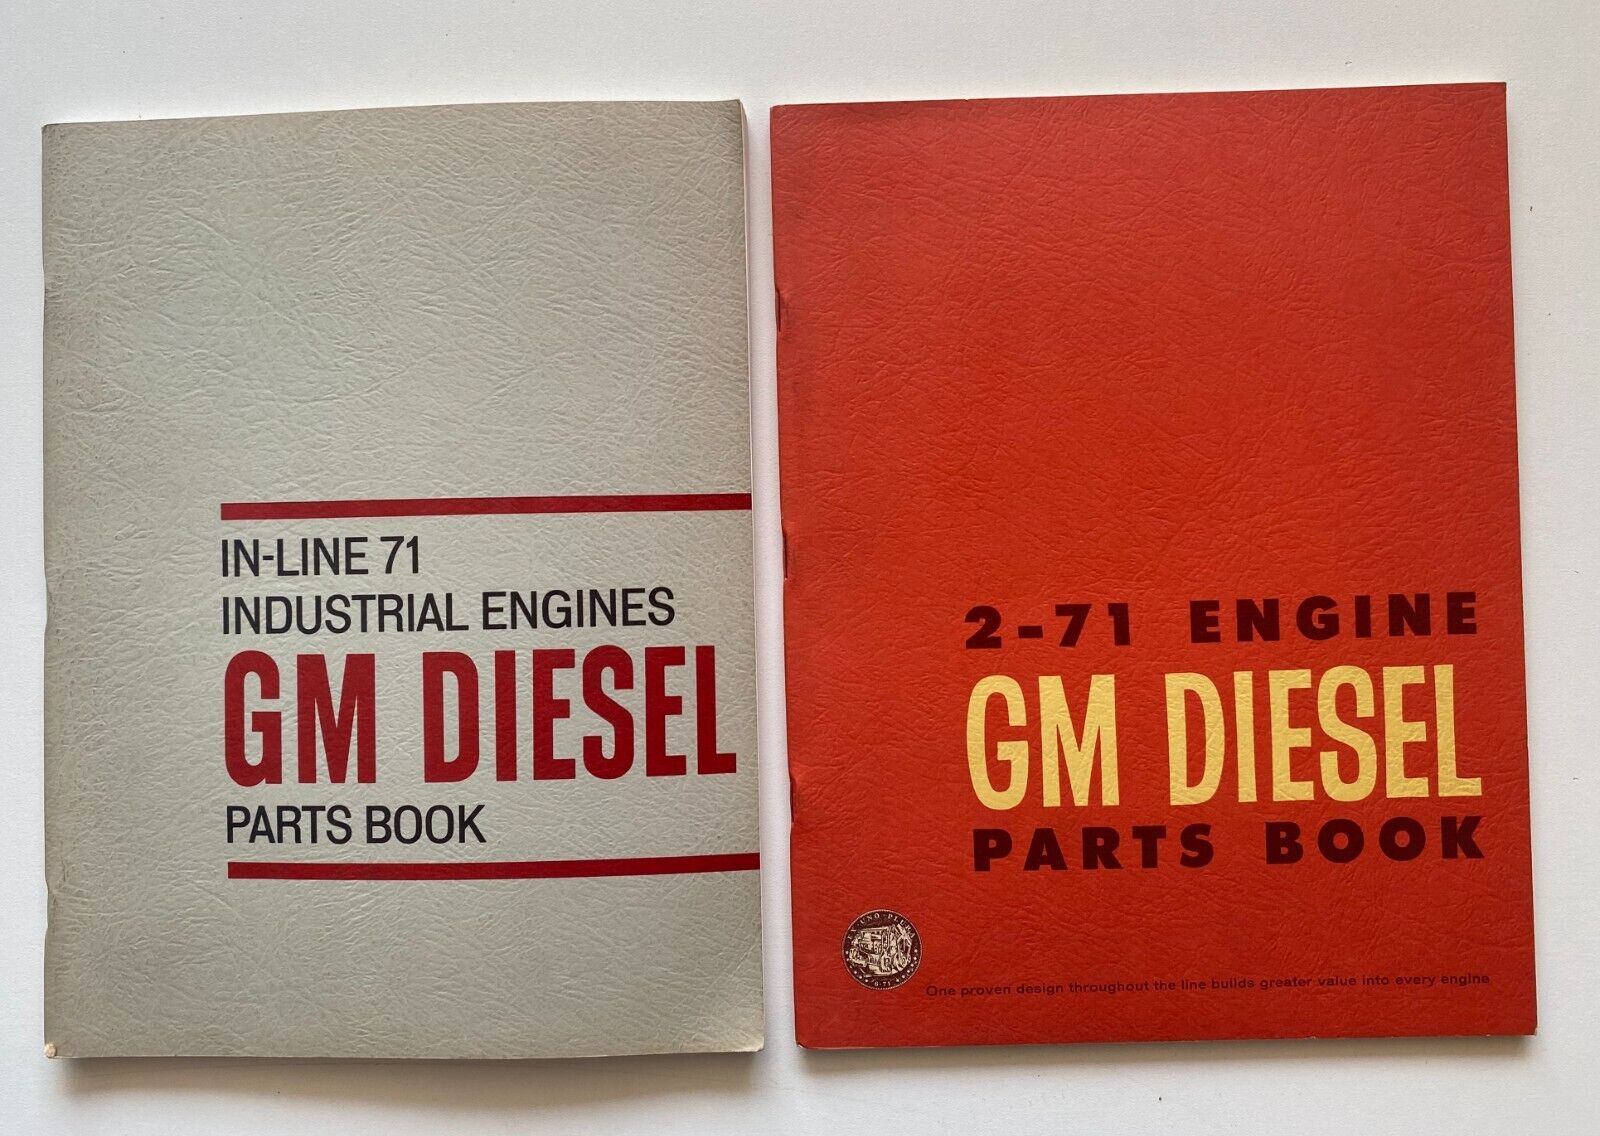 Vintage GM Diesel Parts Books, 1960’s.